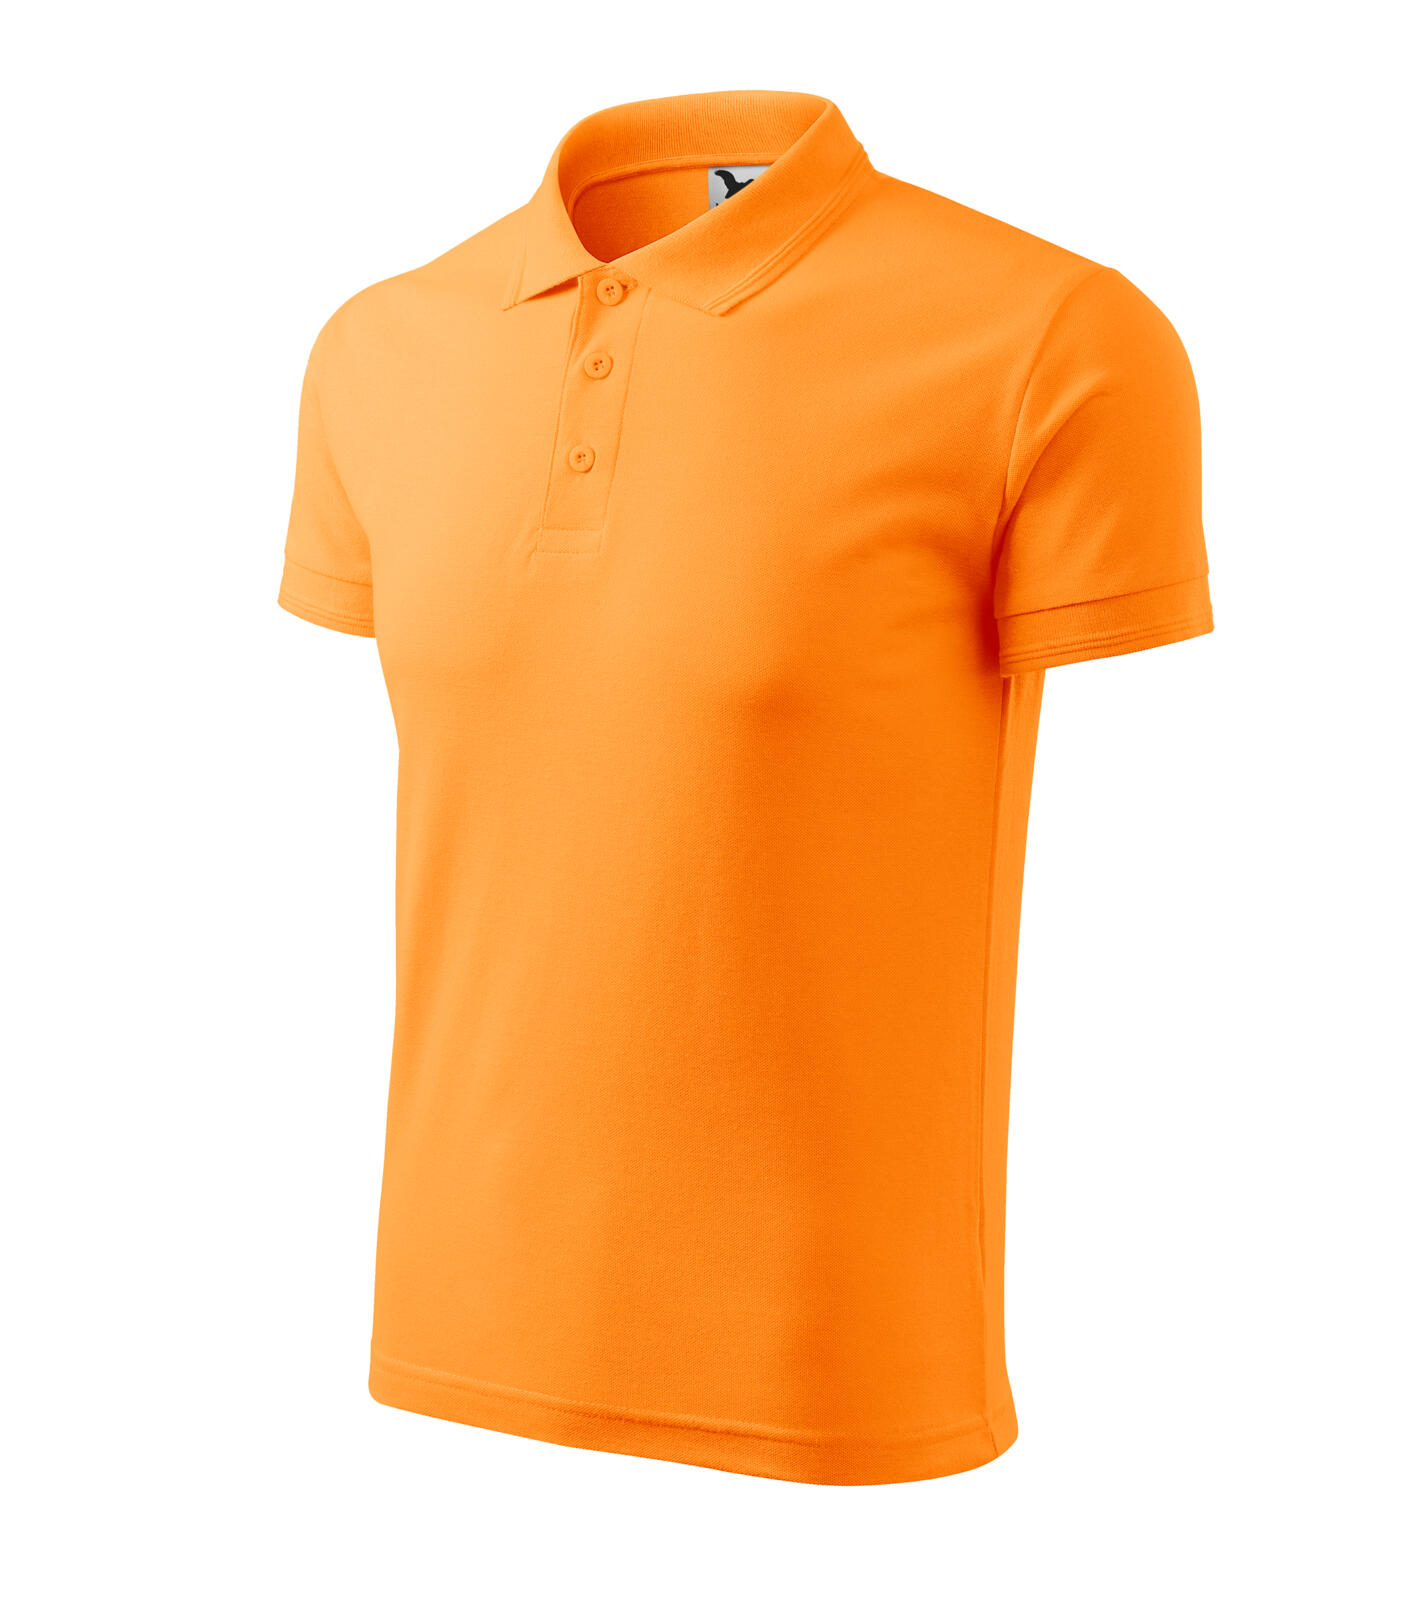 Pique Polo Polokošile pánská Barva: tangerine orange, Velikost: 2XL